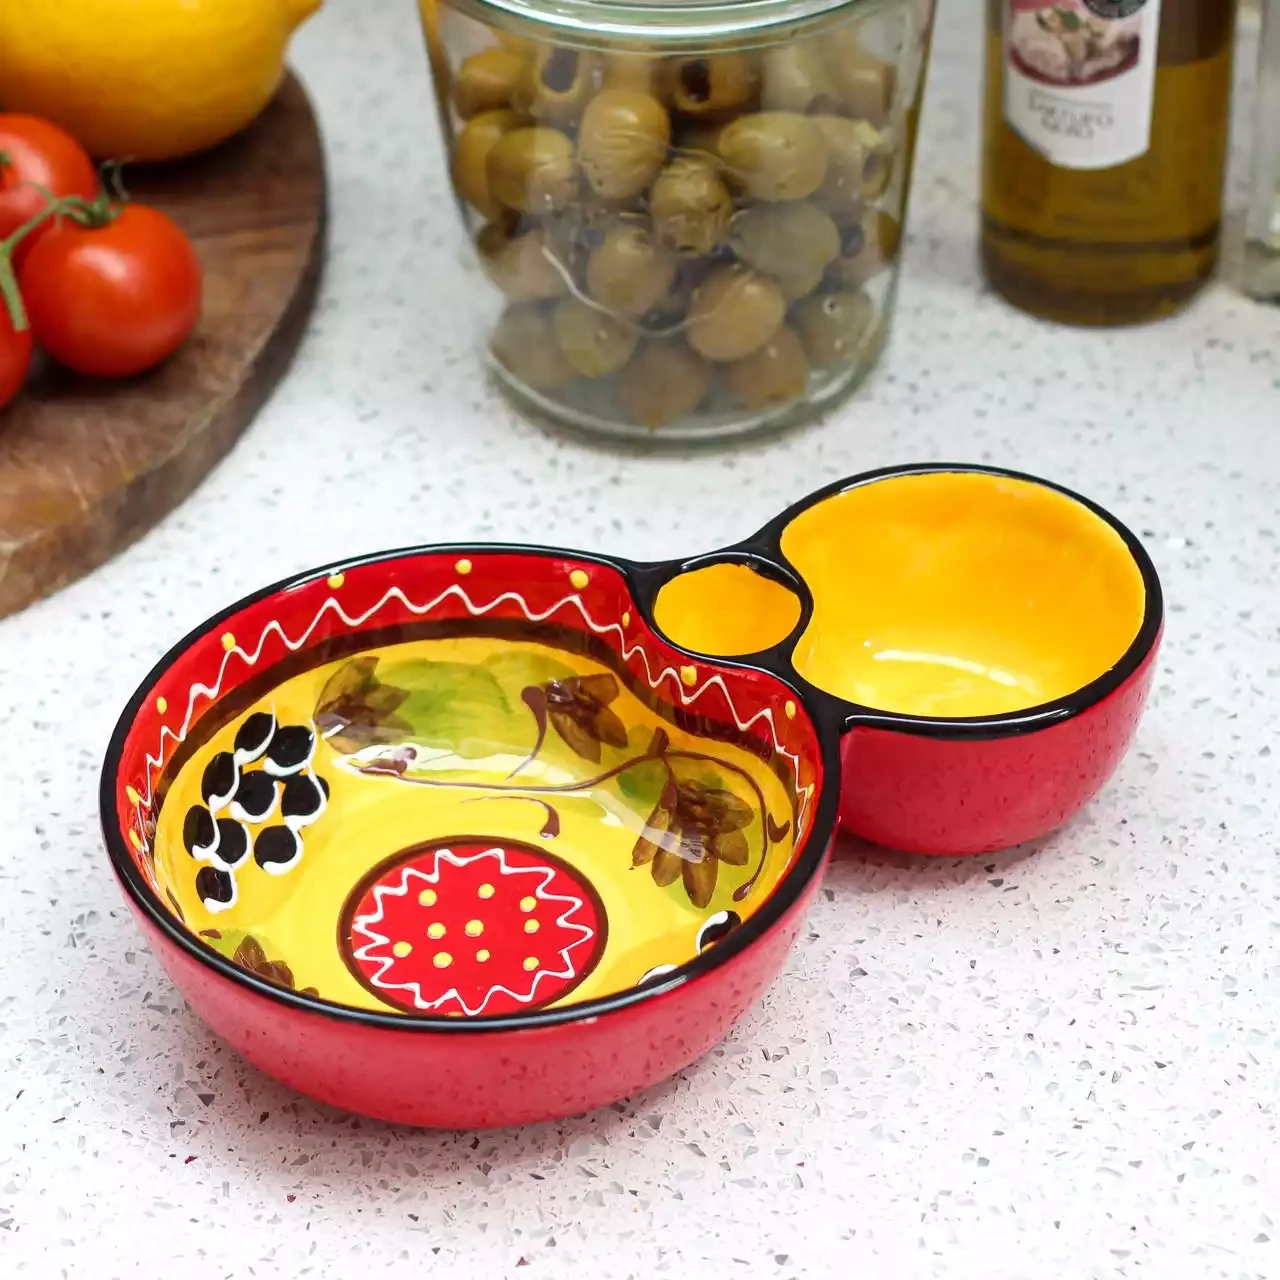 Classic Spanish Hand Painted Ceramic Olive Dish - Grapes by Verano Ceramics